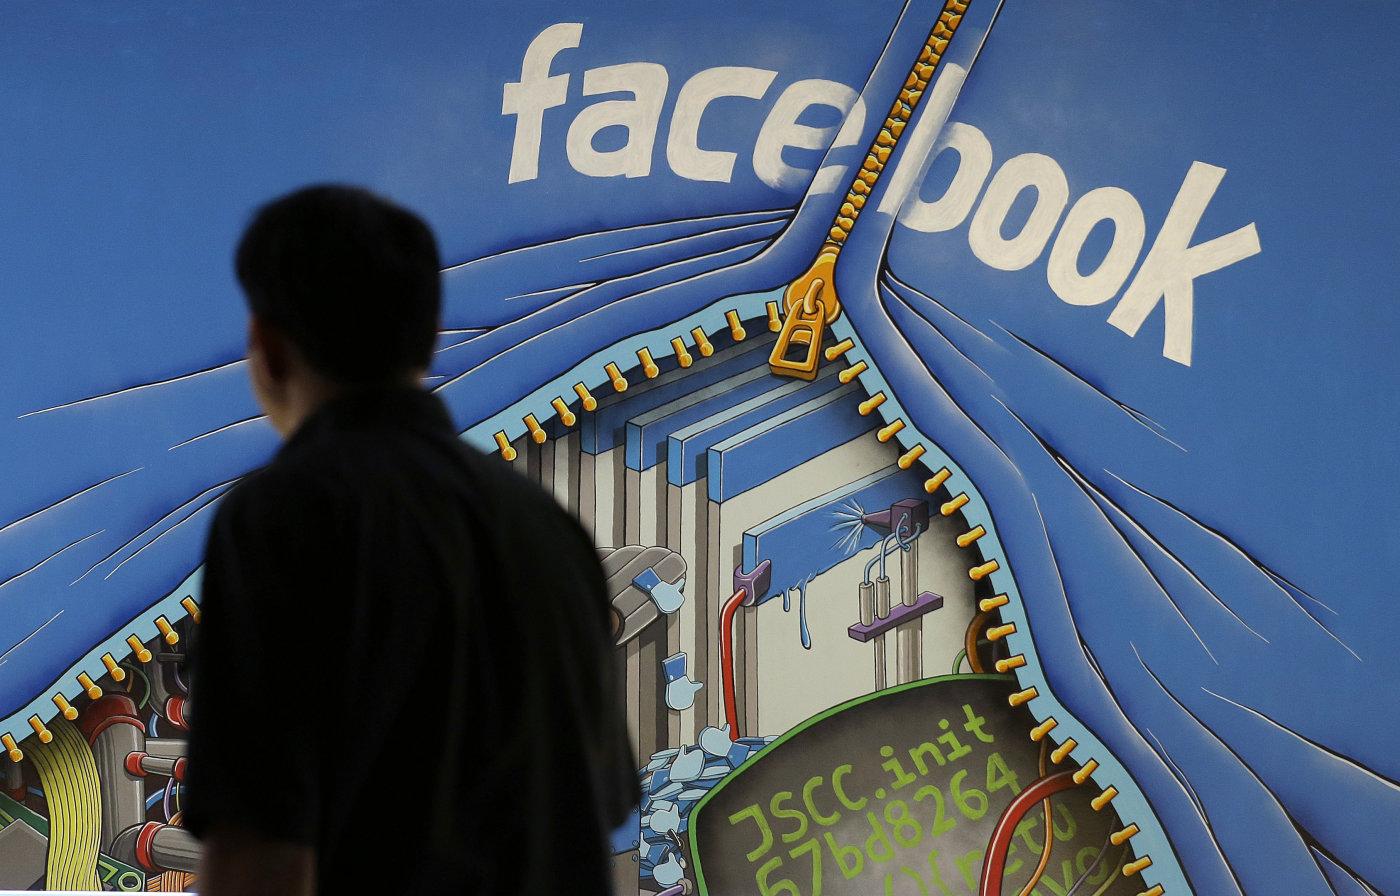 More information about "Το Facebook έπεσε θύμα backdoor hacking"